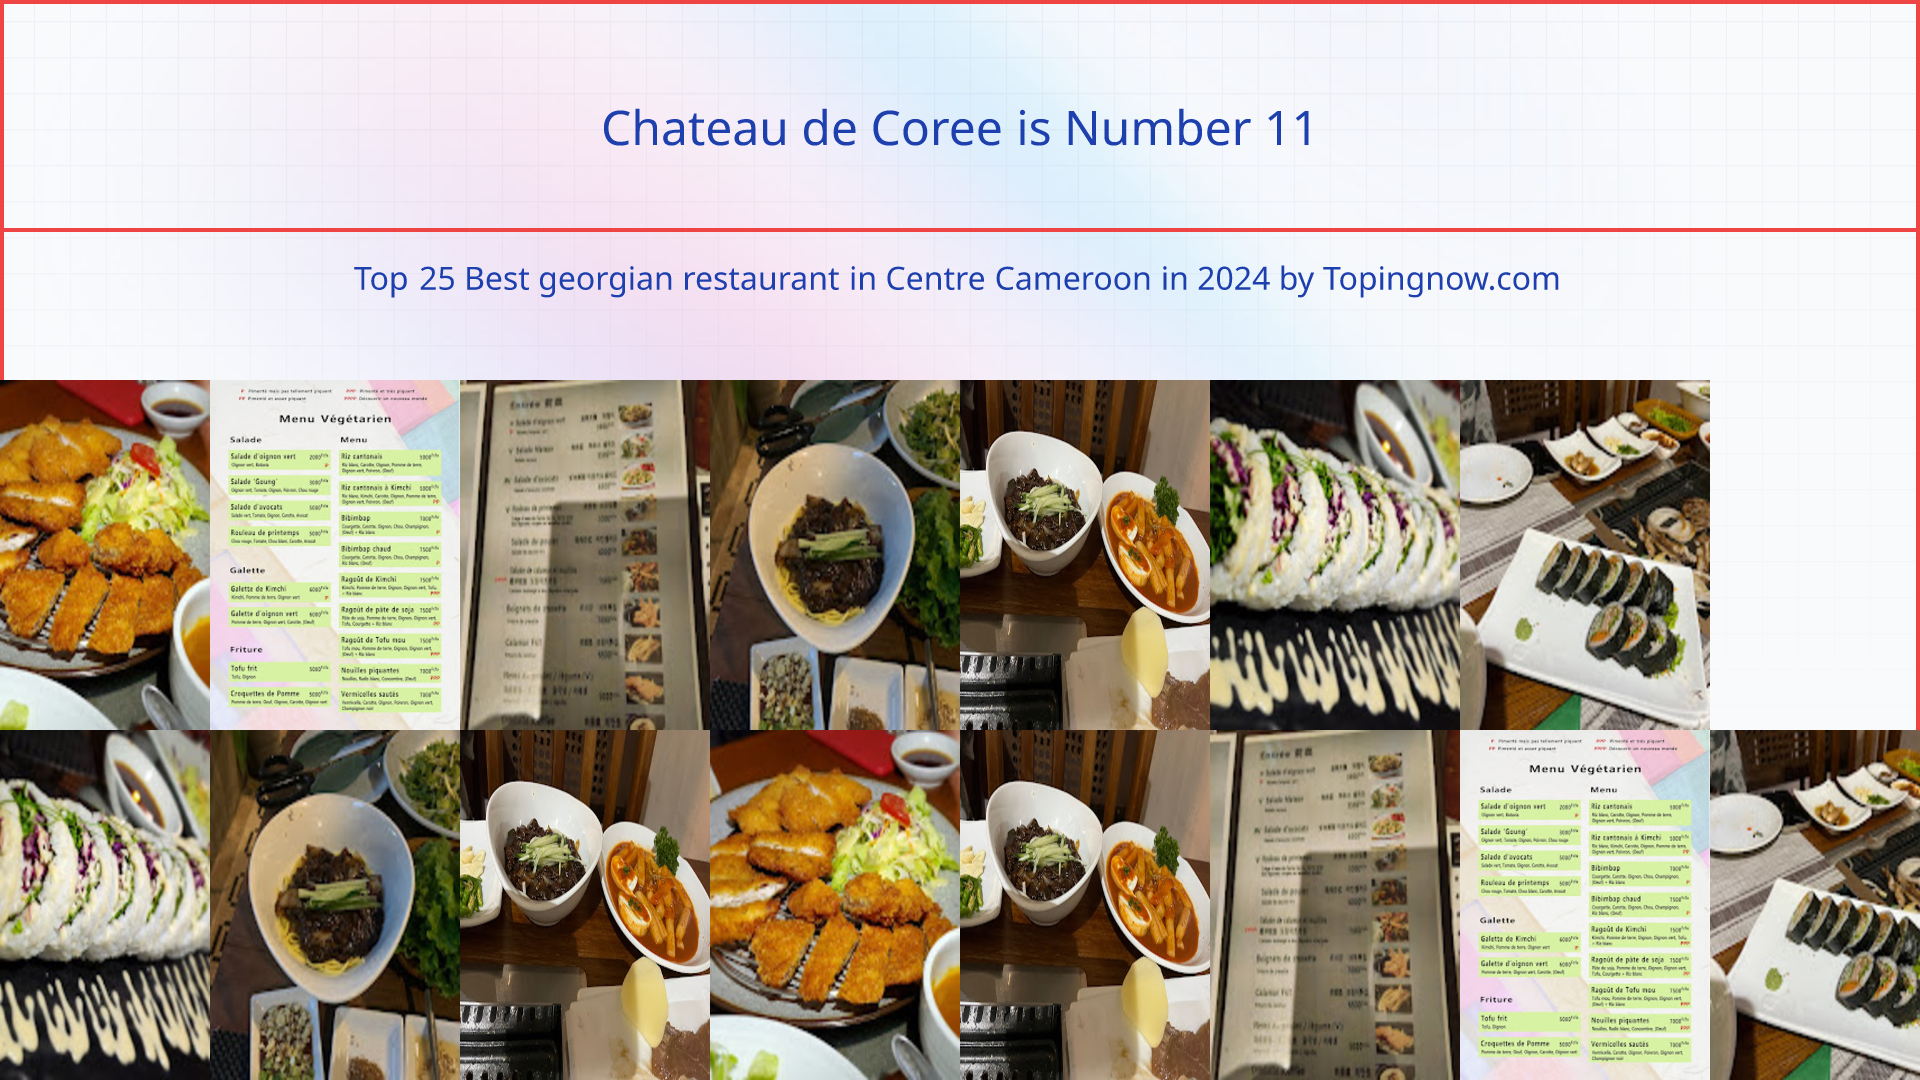 Chateau de Coree: Top 25 Best georgian restaurant in Centre Cameroon in 2024